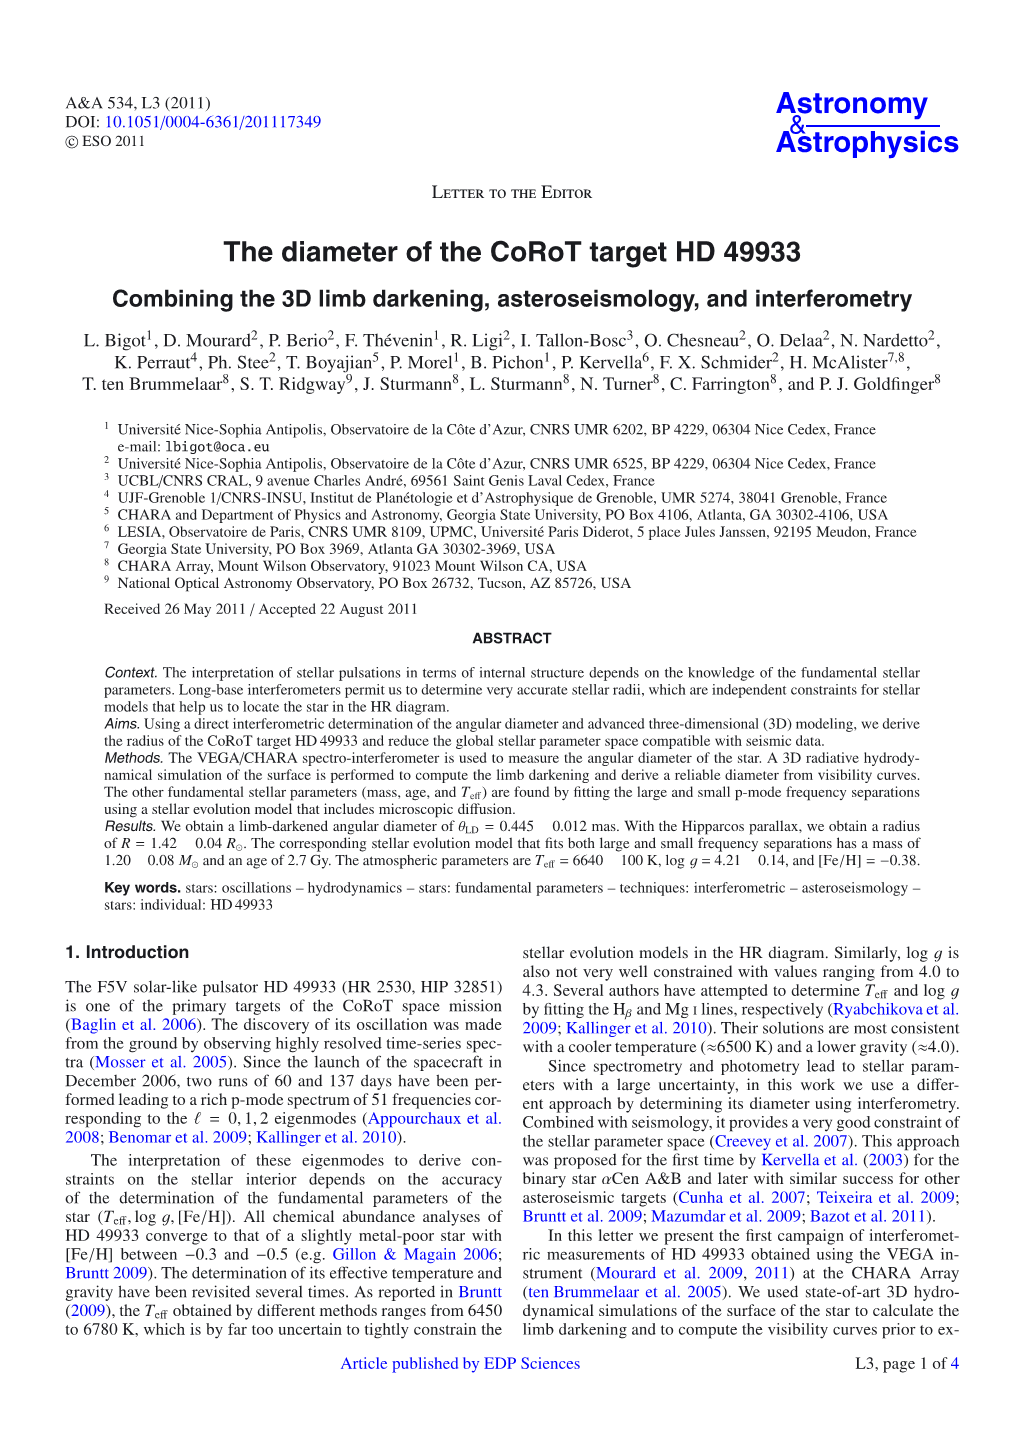 The Diameter of the Corot Target HD 49933 Combining the 3D Limb Darkening, Asteroseismology, and Interferometry